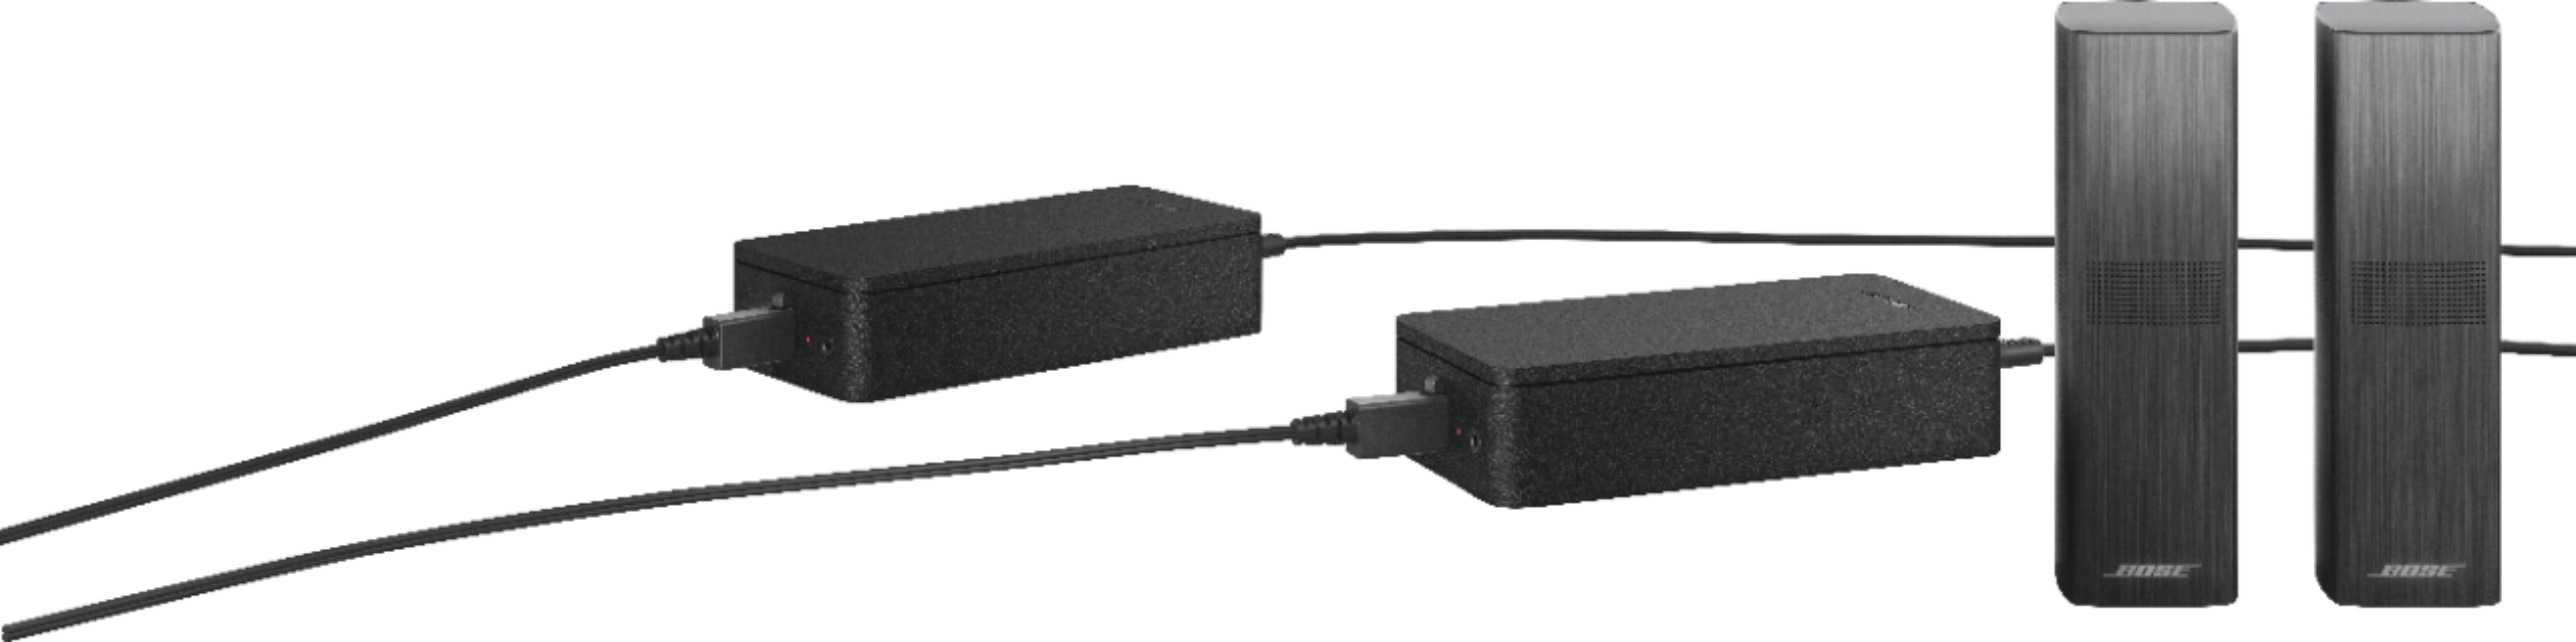 Sovereign important Additive Bose Surround Speakers 700 120-Watt Wireless Satellite Bookshelf Speakers  (Pair) Black 834402-1100 - Best Buy